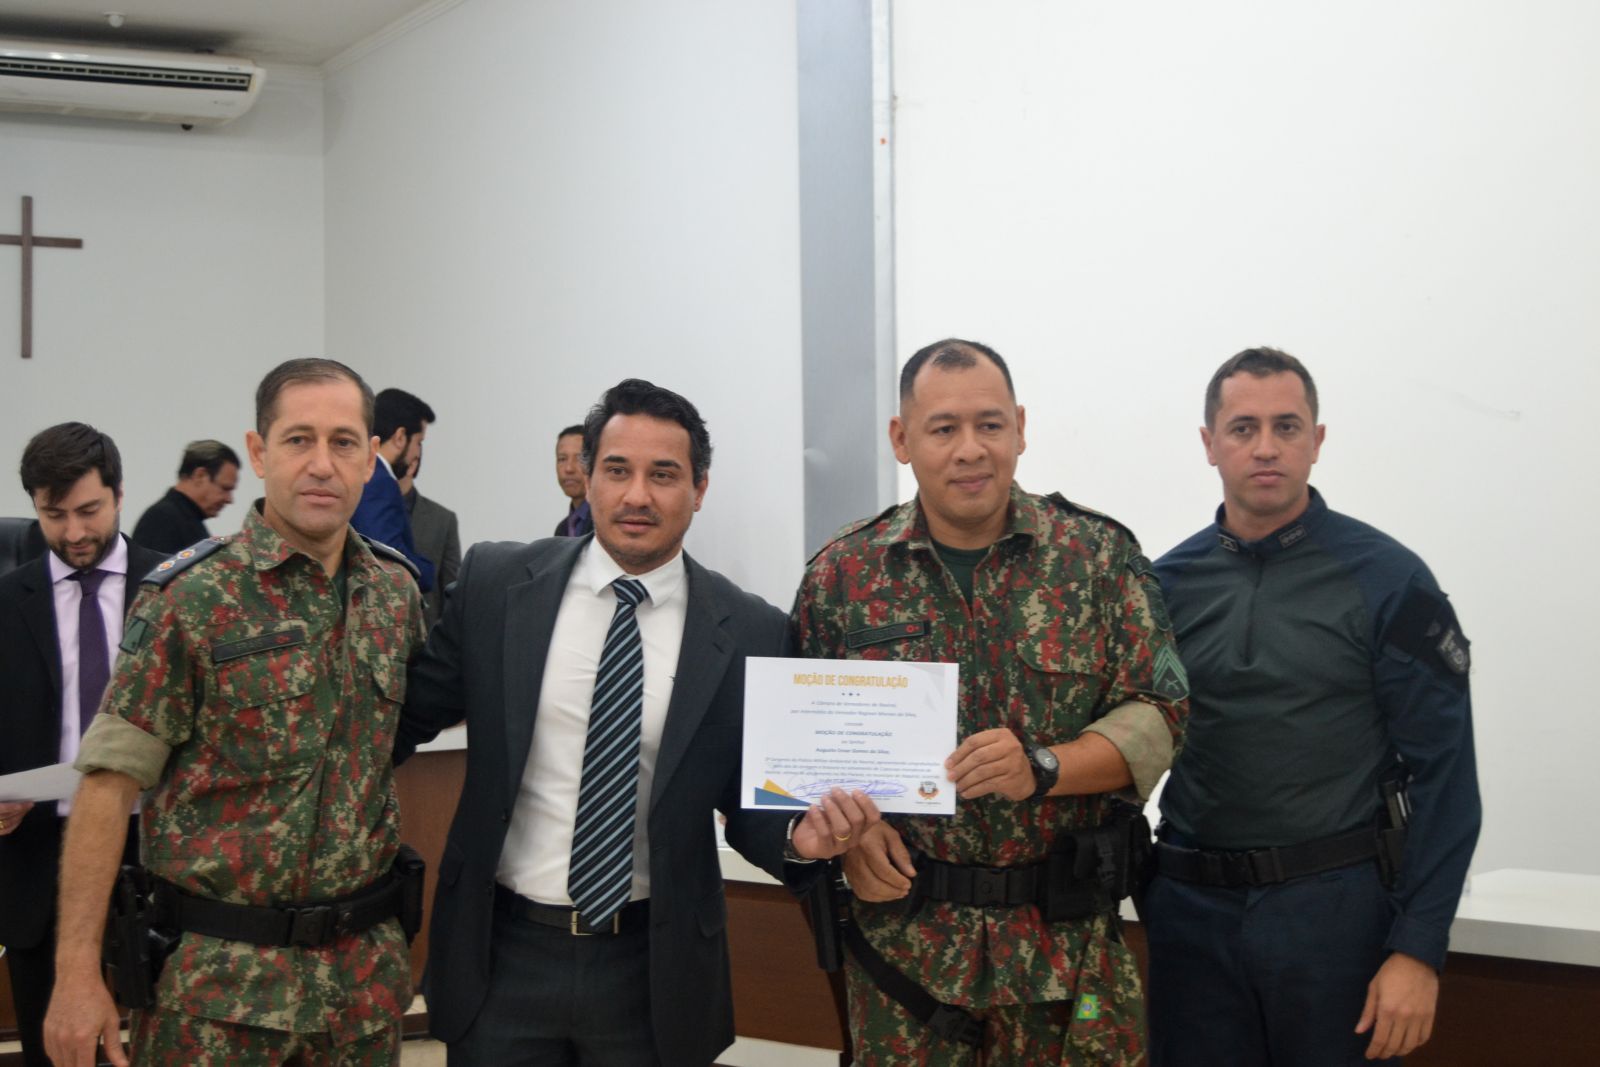 1° Tenente Comandante Ismael Carlos Frais, Vereador Rodrigo Sacuno, 3° Sargento PM Augusto Cesar Gomes e Tenente-Coronel João Paulo Chink